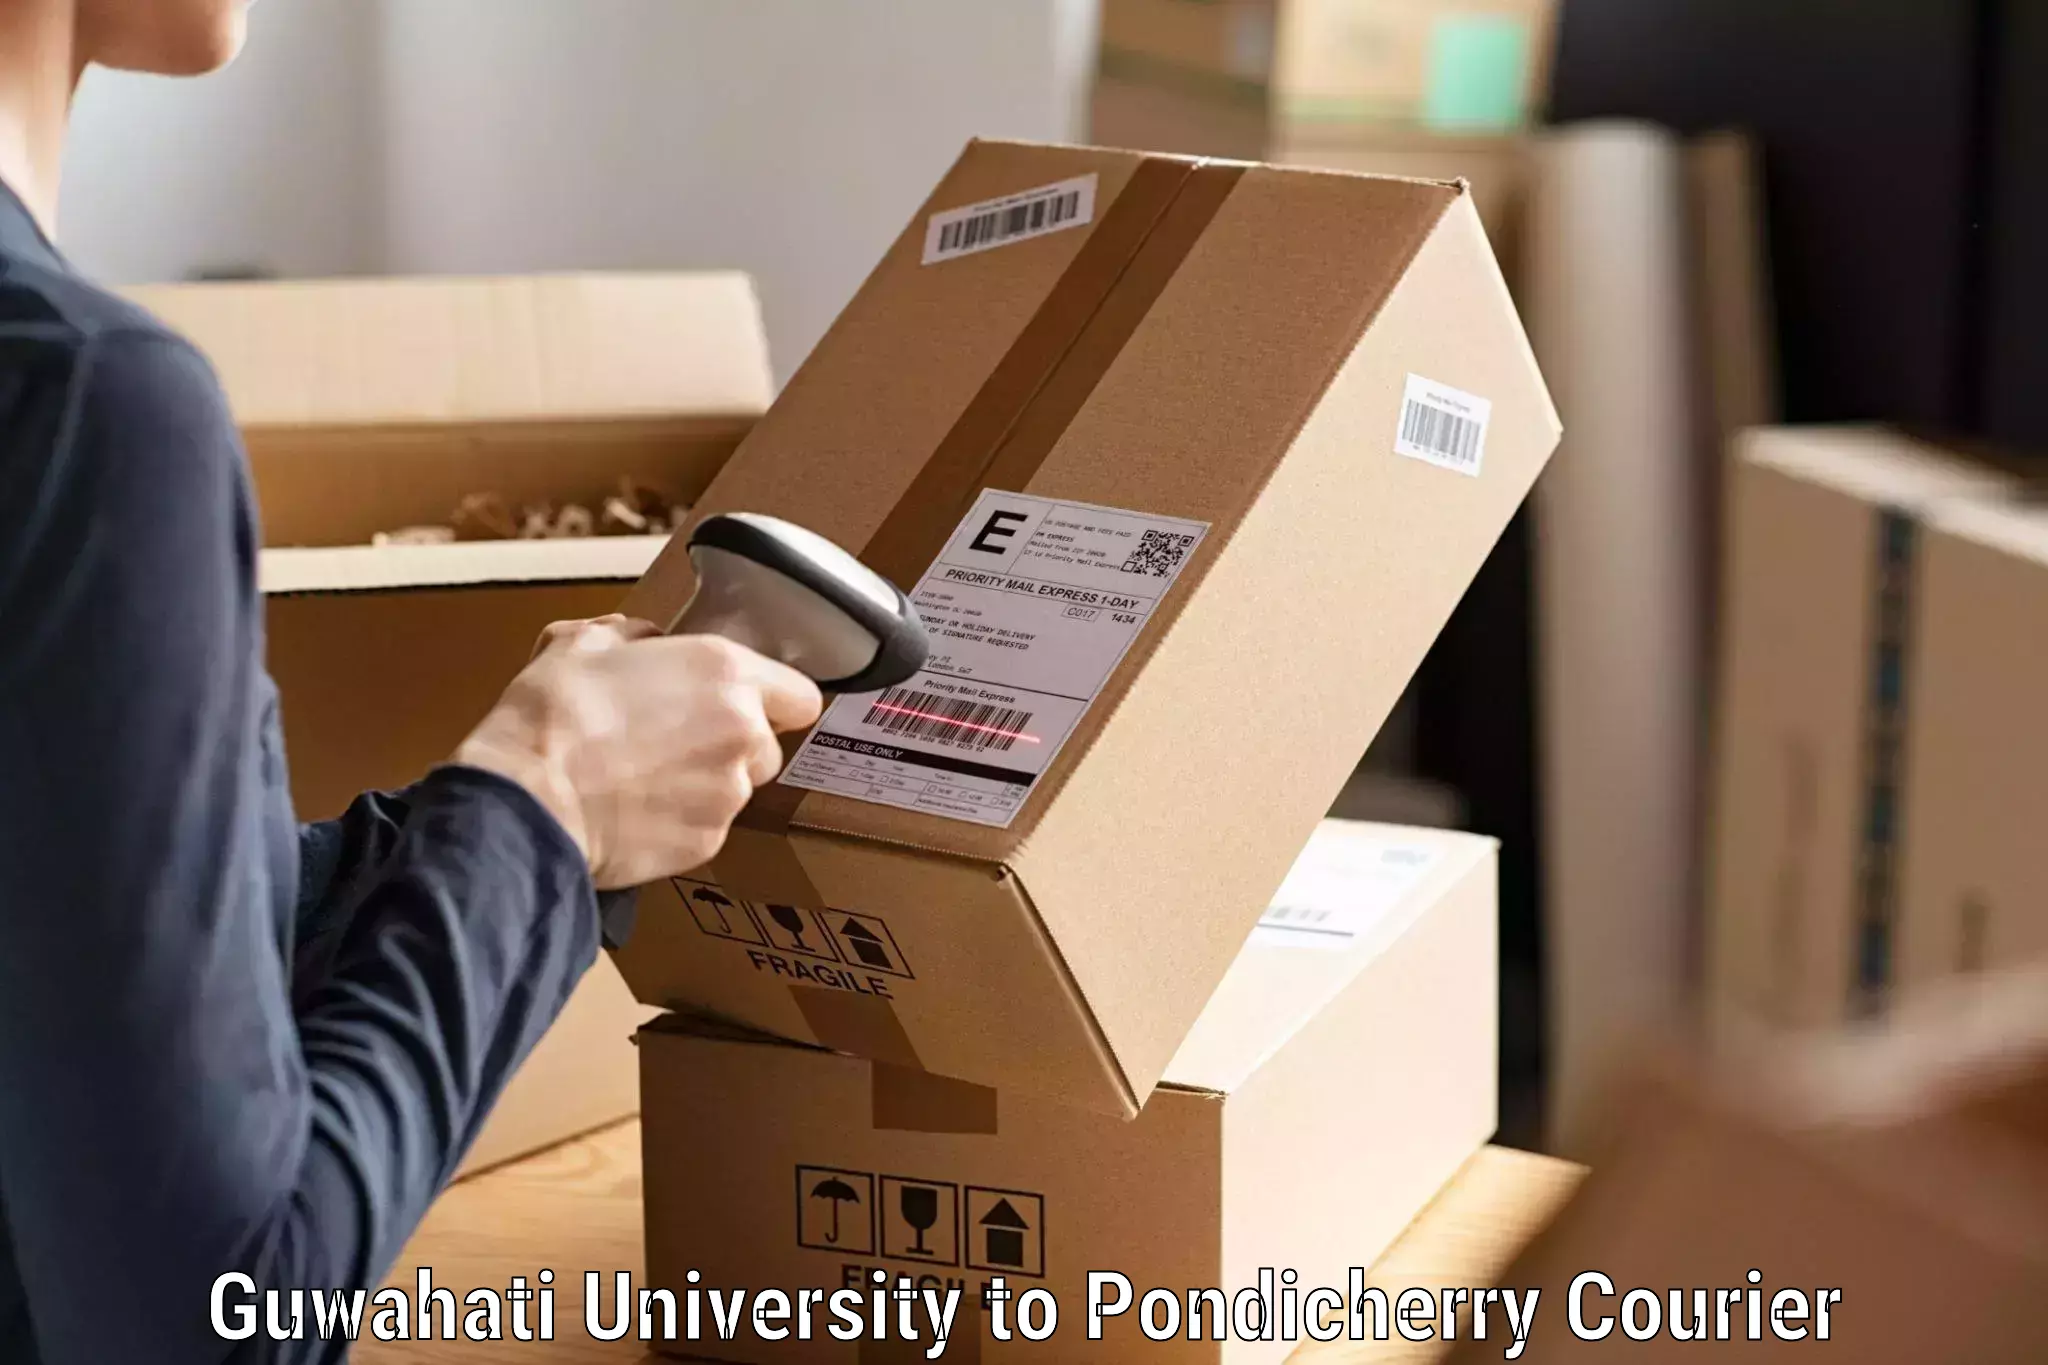 Express courier capabilities Guwahati University to NIT Puducherry